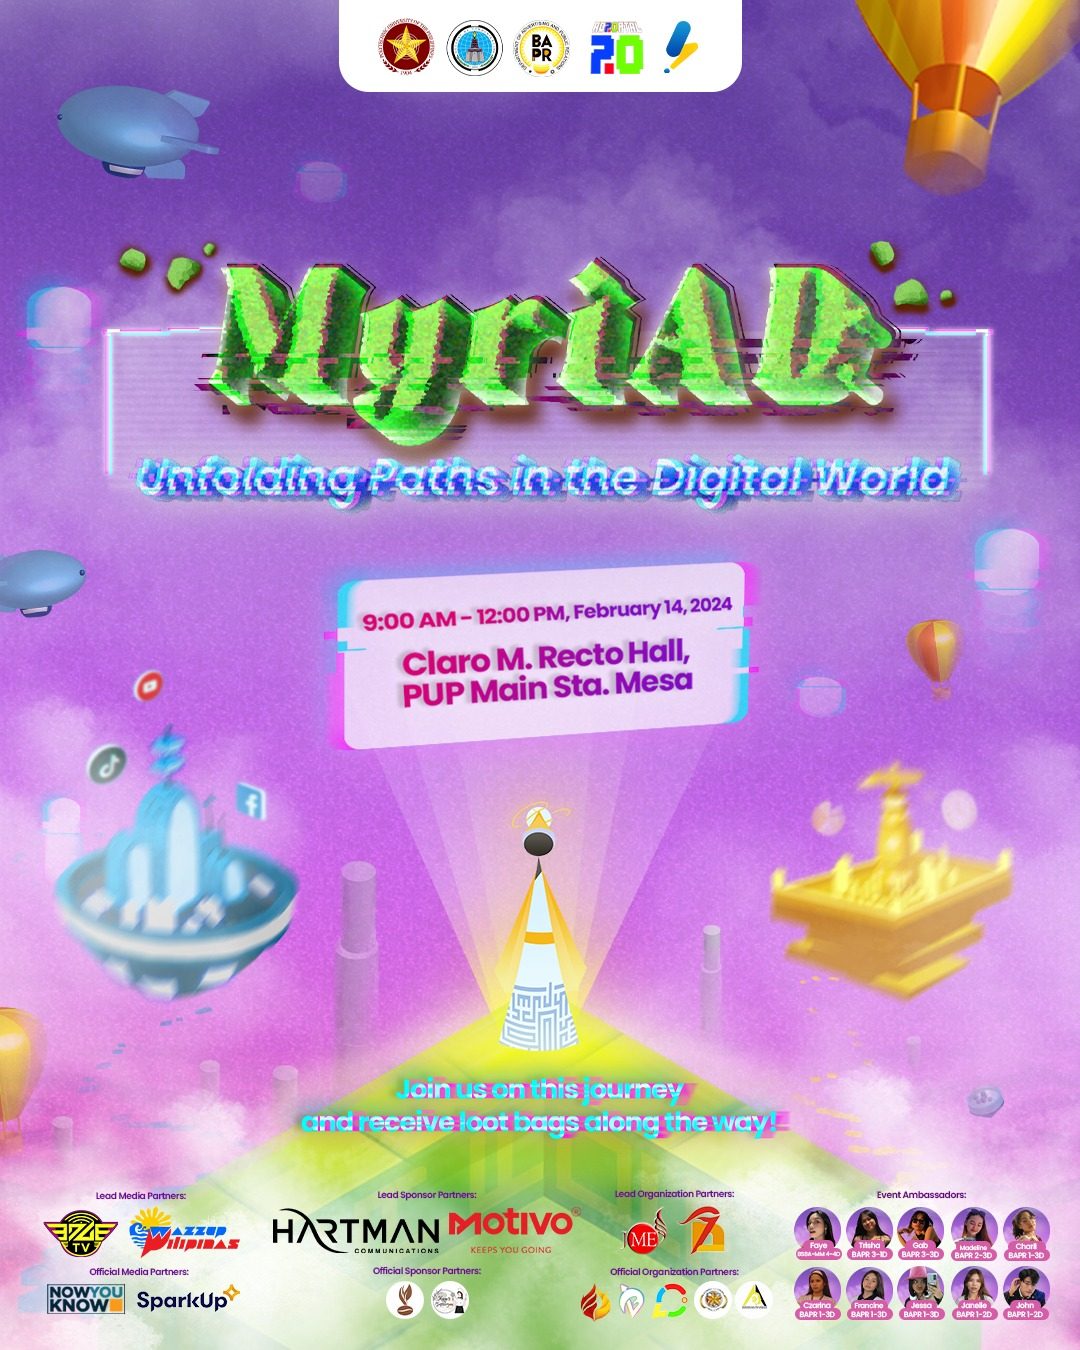 K1DLAT’s ‘MyriAD’ Event to Take Stage on 20th AdCongress